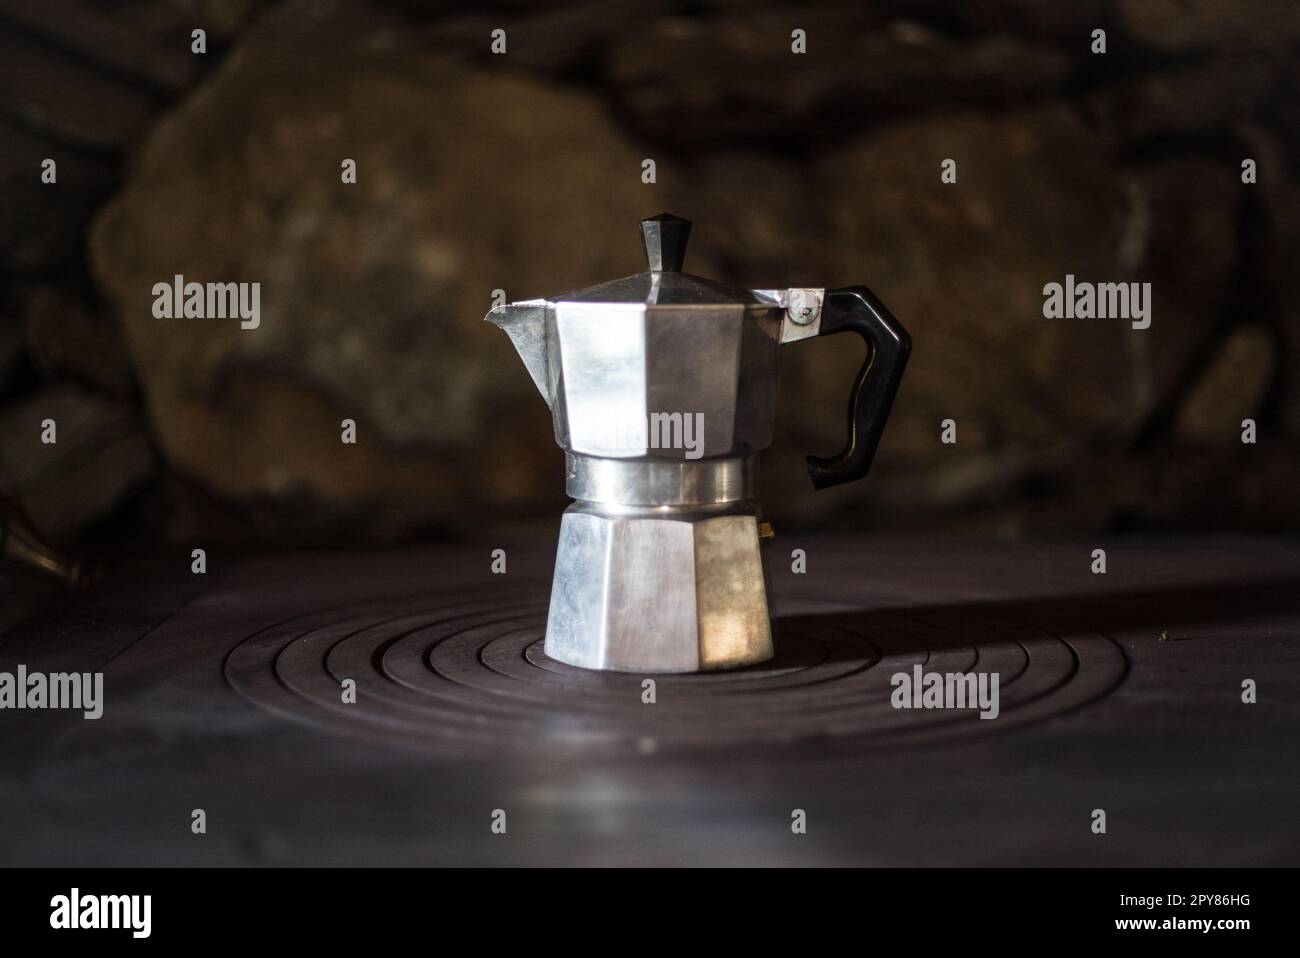 Macchina da caffè moka bialetti immagini e fotografie stock ad alta  risoluzione - Alamy